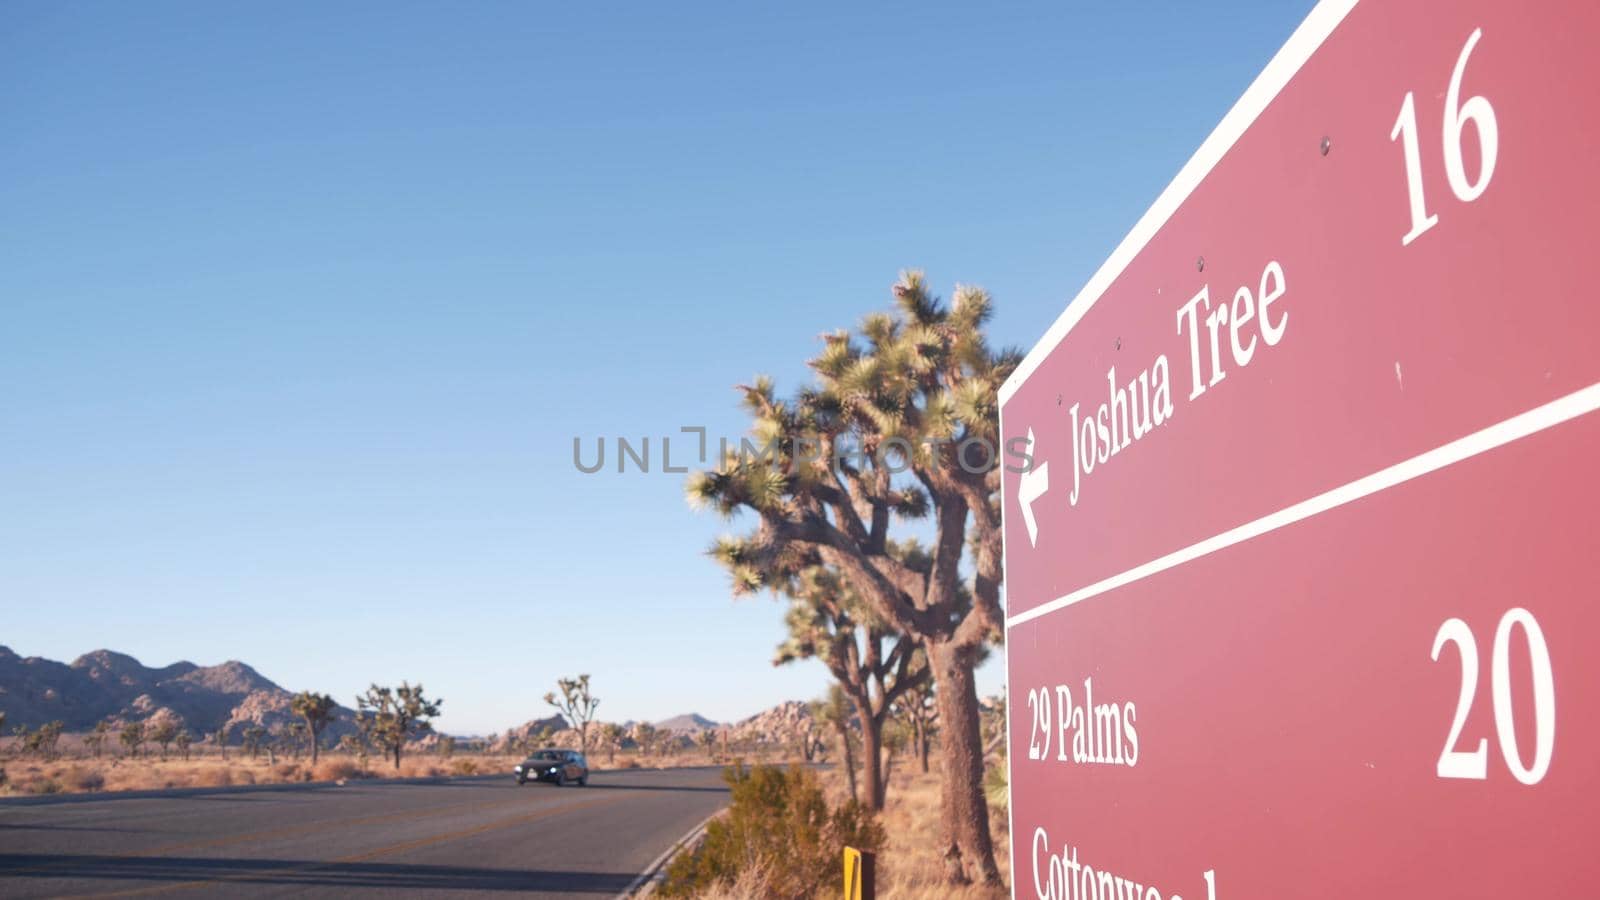 Crossroad sign, road intersection, California USA. Joshua Tree desert wilderness by DogoraSun